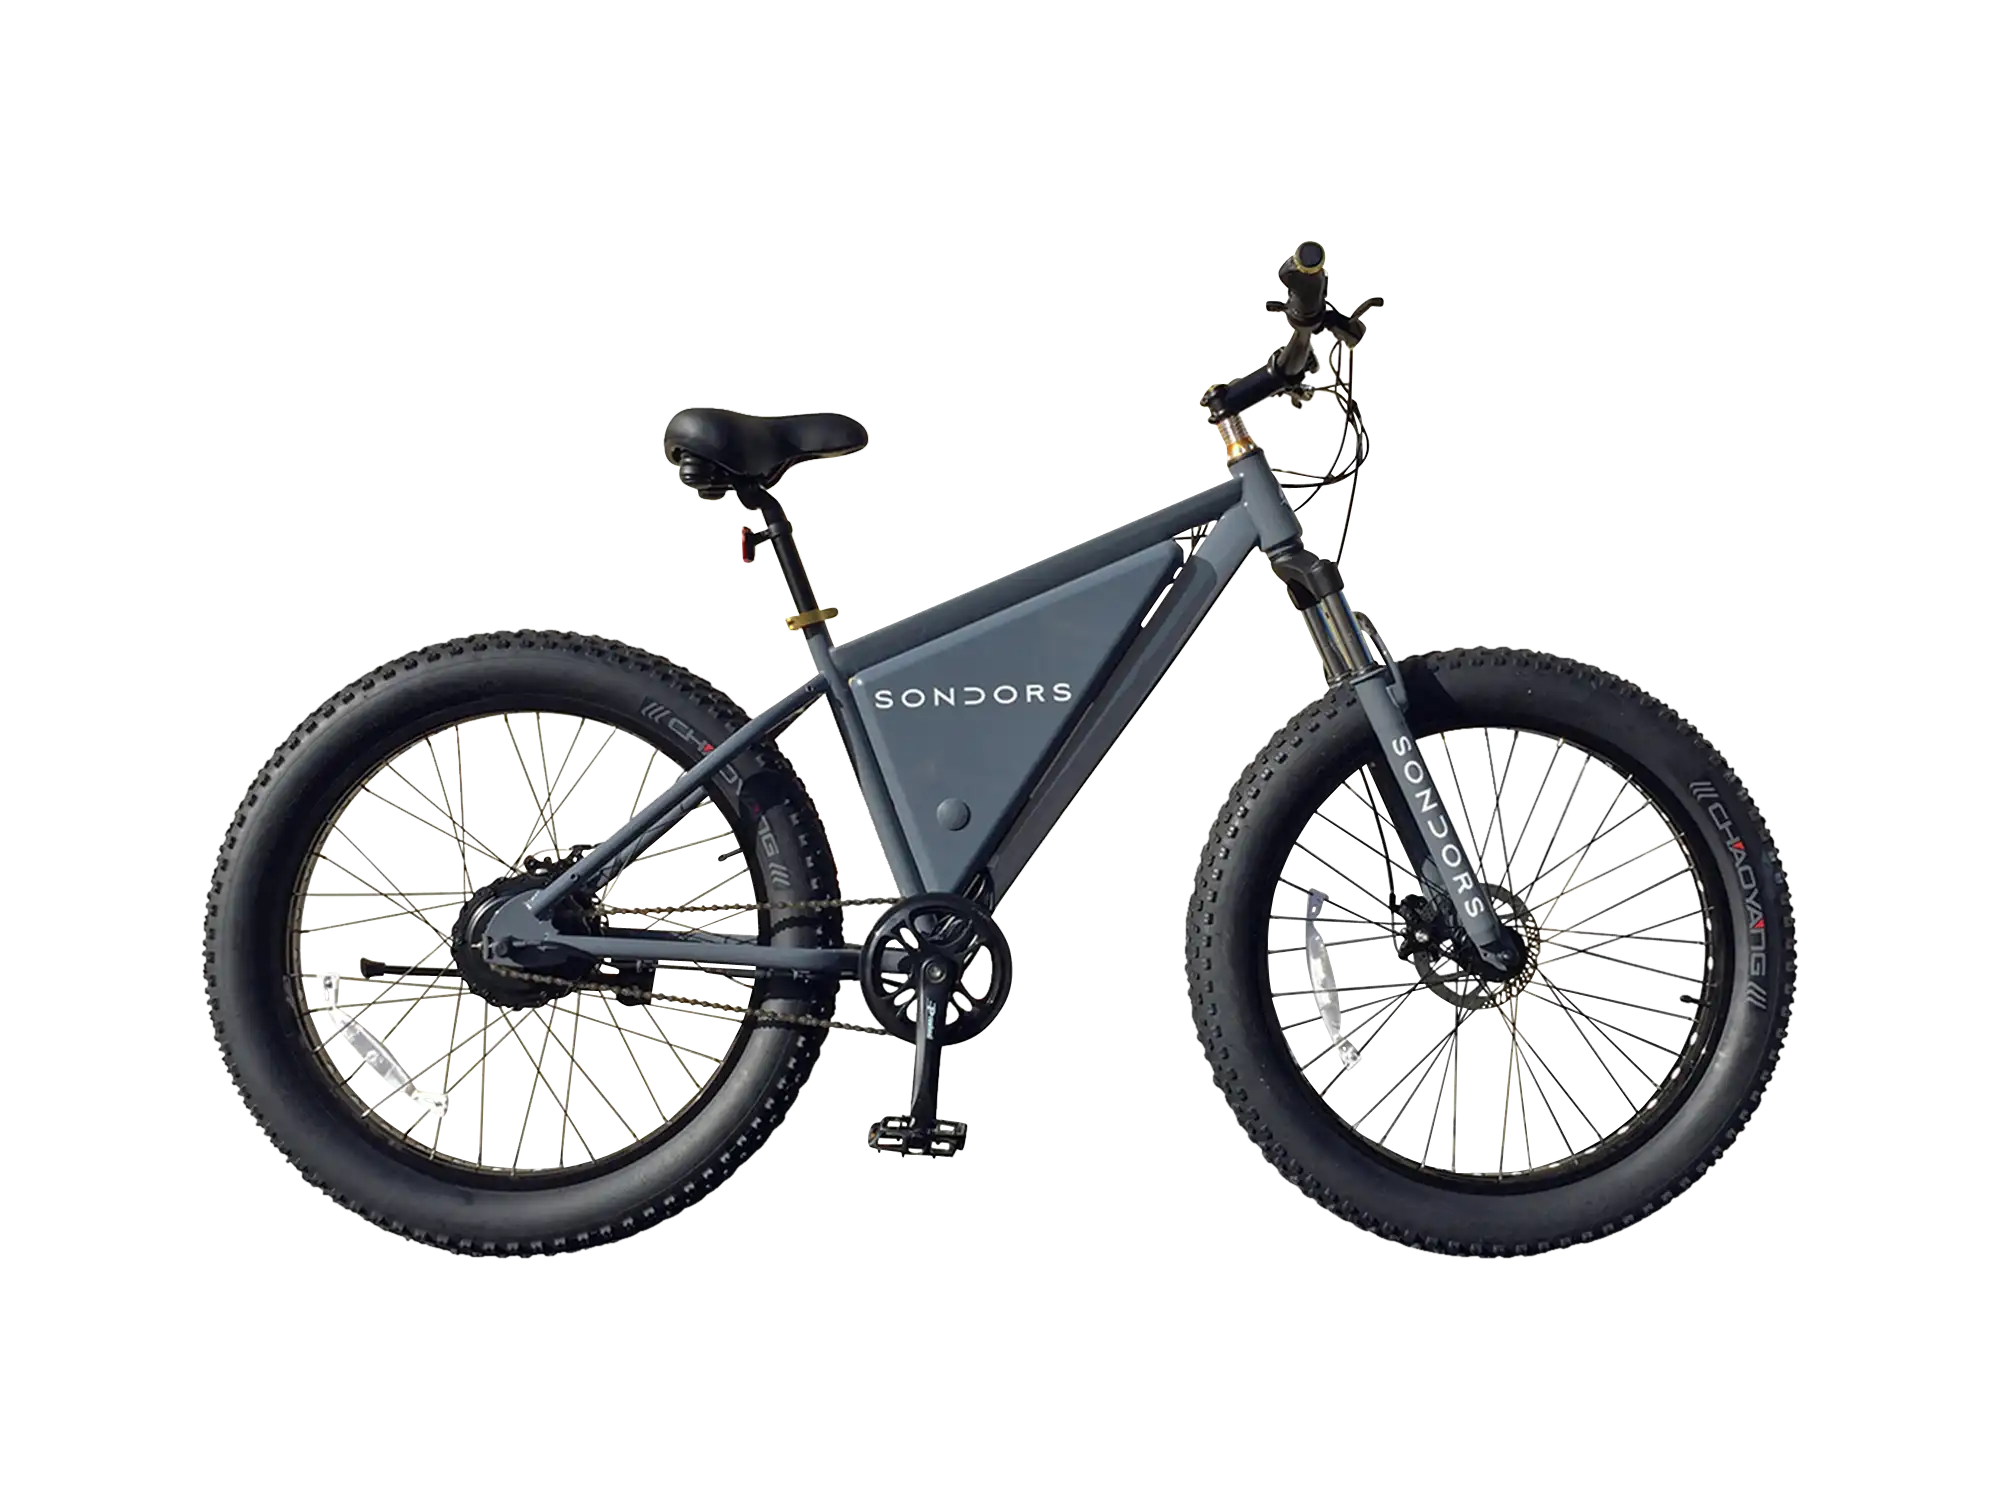 https://ebr-prod-bucket.s3.amazonaws.com/r-f-img-webp/review-featured-images/2016-Sondors-Ebike-electric-bike-review.webp